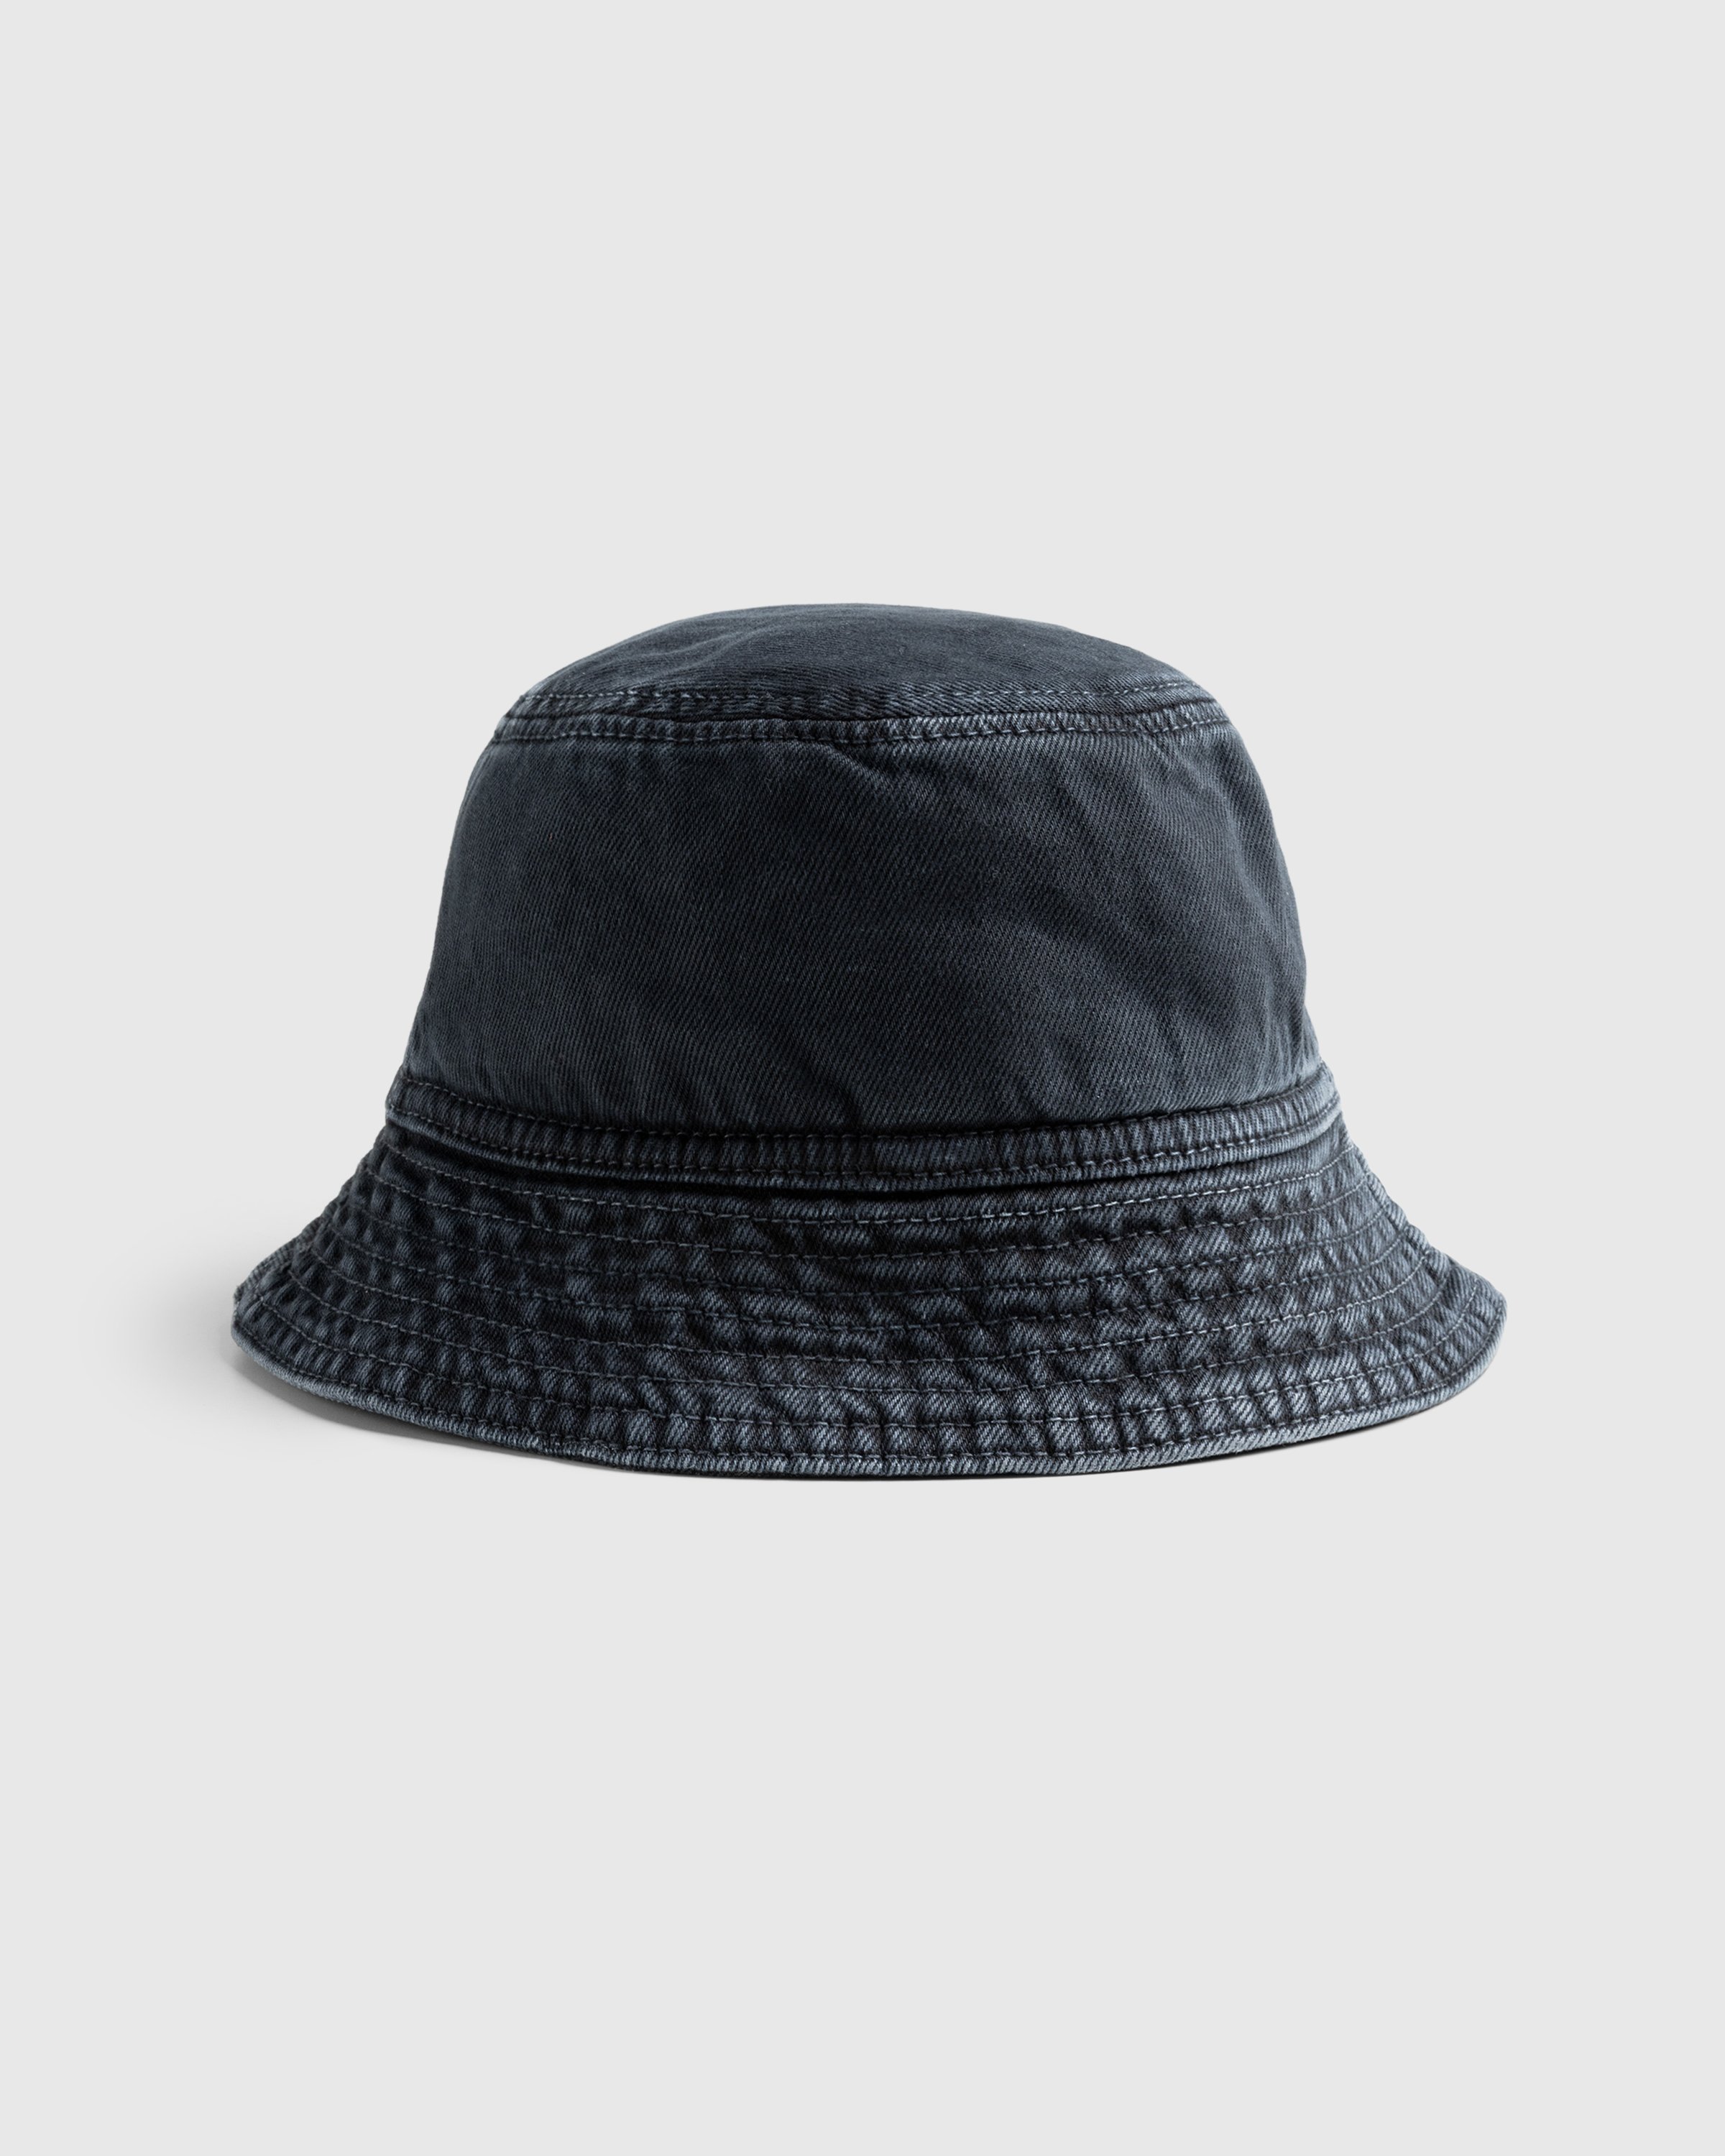 Carhartt WIP - Garrison Bucket Hat Black /stone dyed - Accessories - Black - Image 2